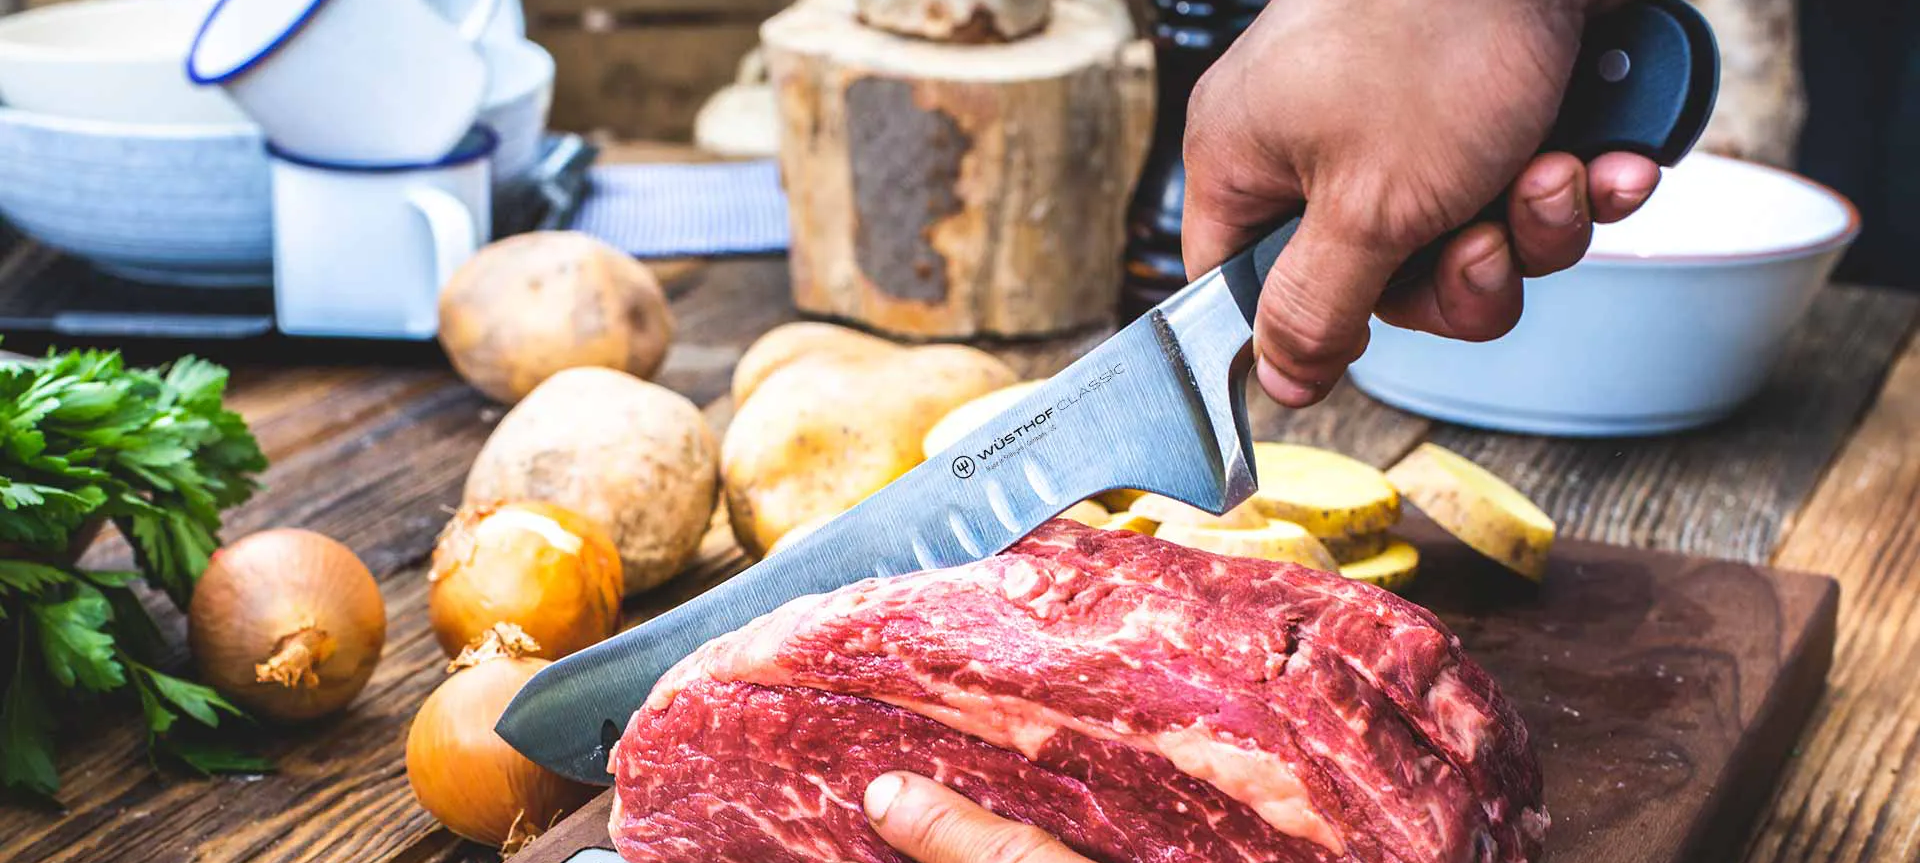 WUSTHOF Butcher Knife cutting beef roast